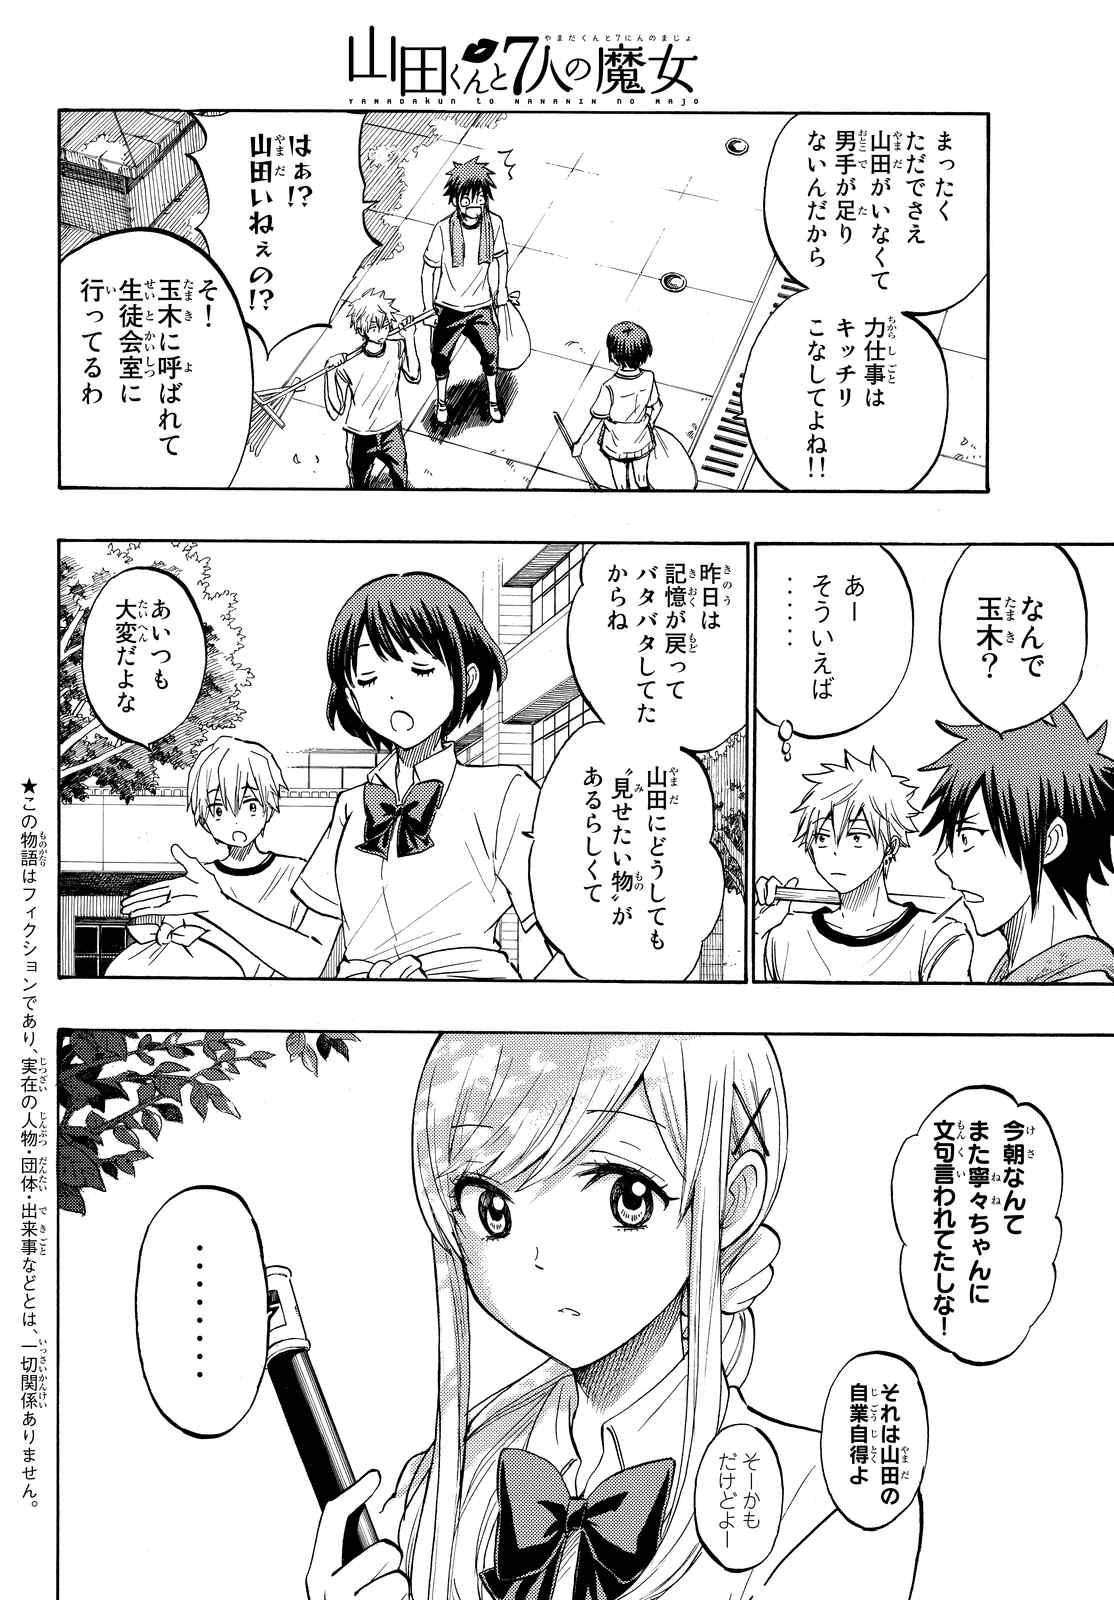 Yamada-kun to 7-nin no Majo - Chapter 225 - Page 2